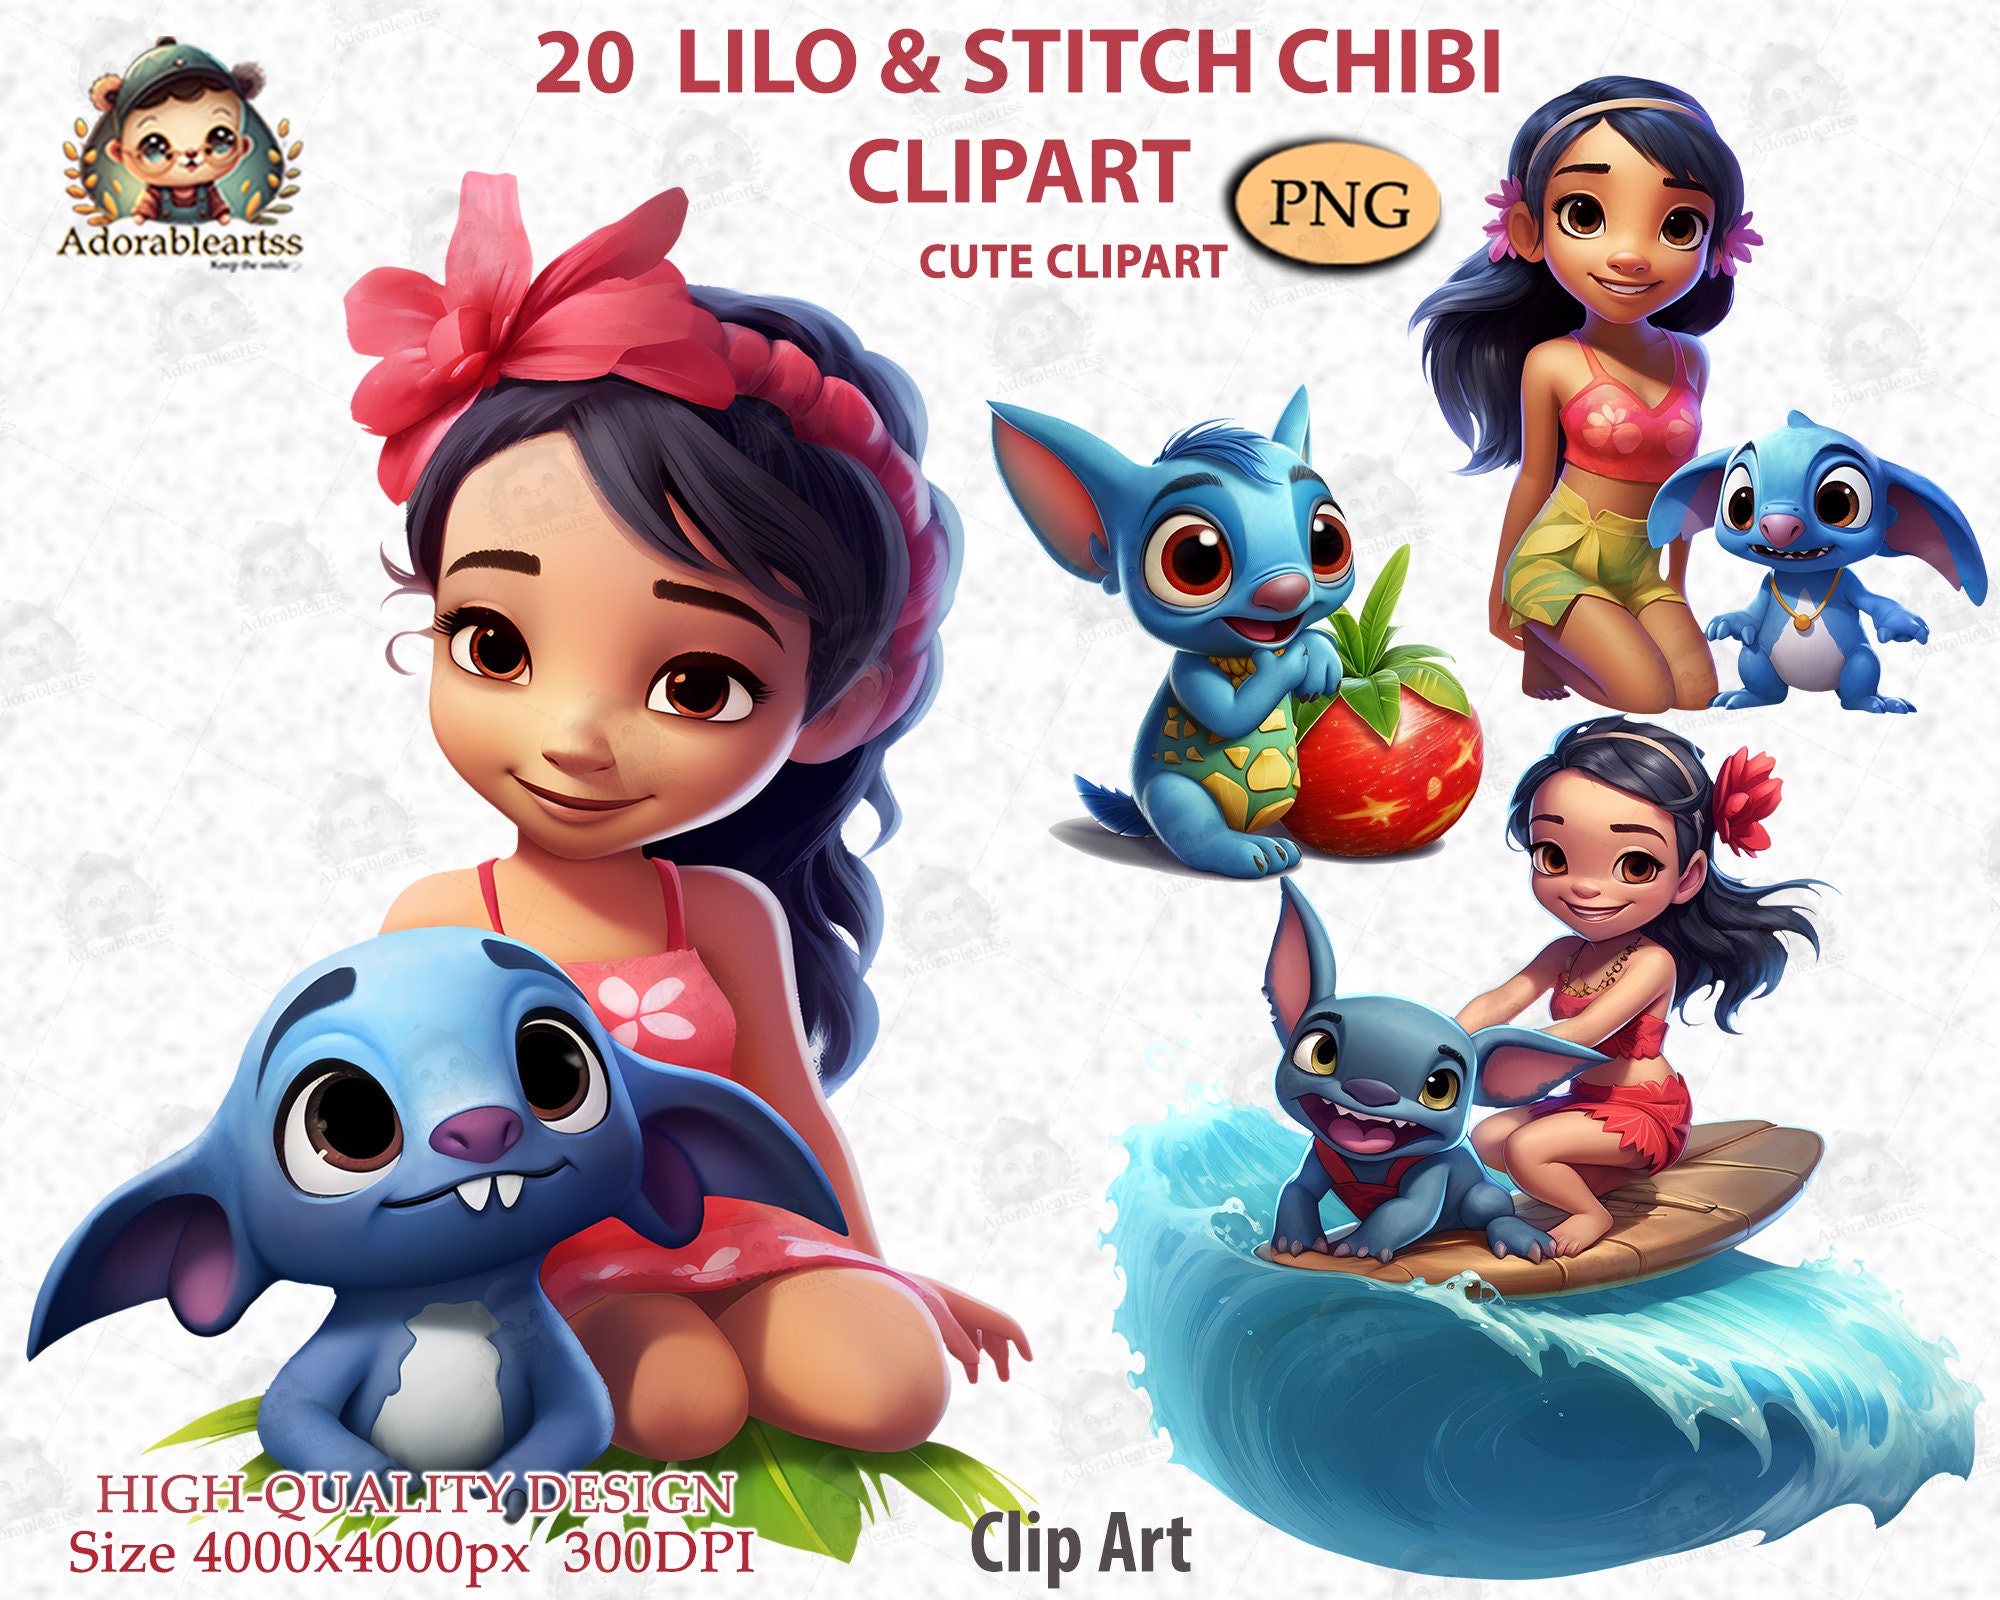 Cute Chibi Stitch Kawaii | Poster